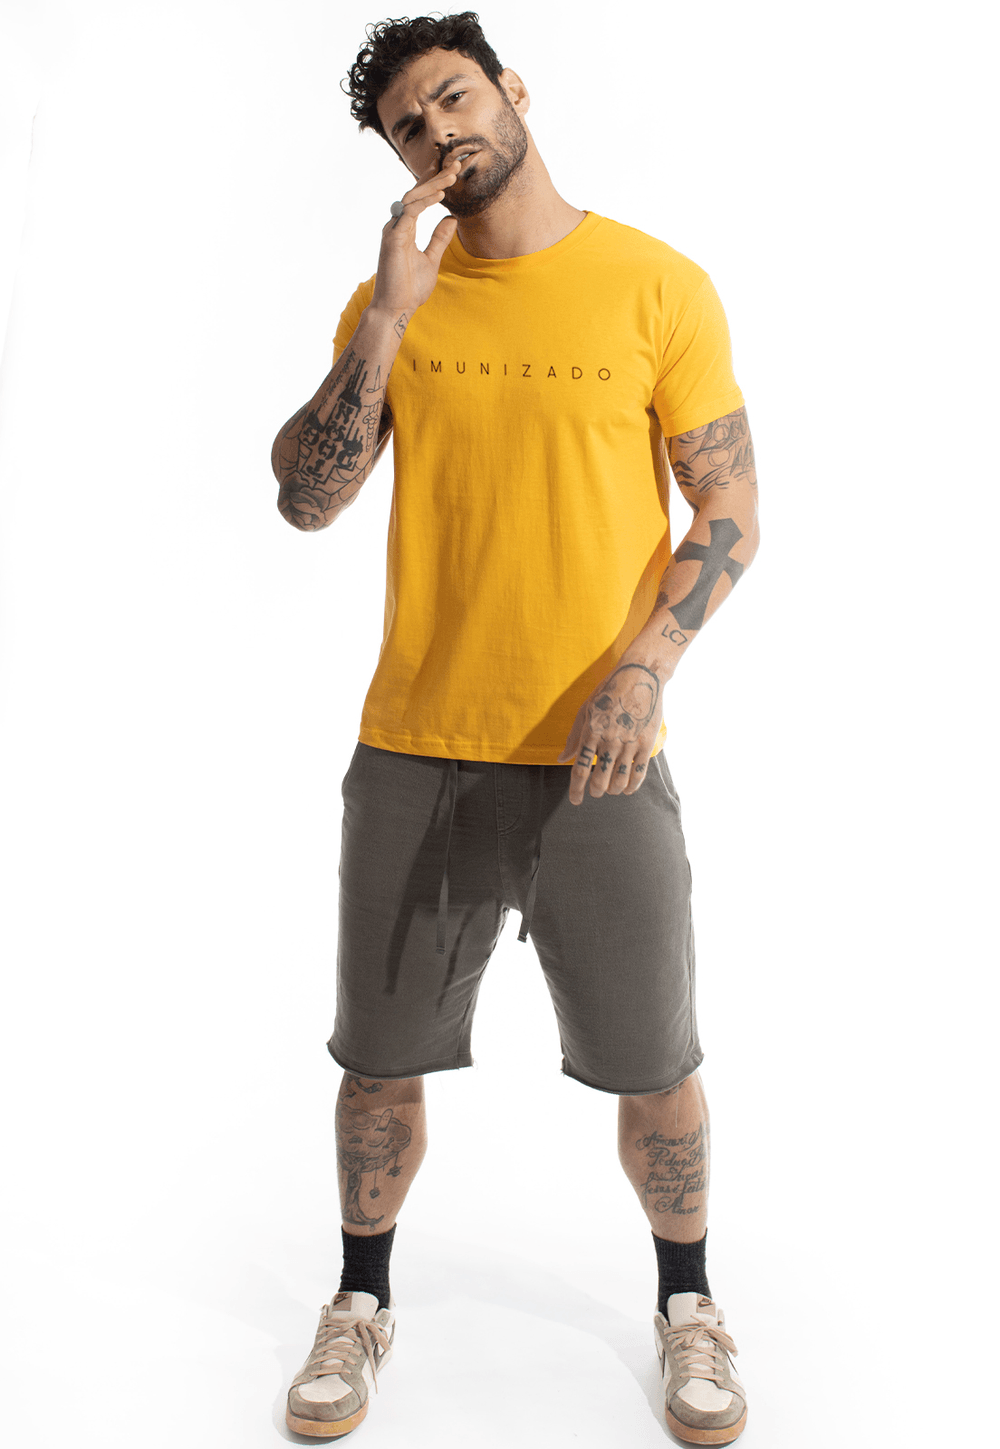 Camiseta Arimlap Imunizado Cor:Amarelo Queimado;Tamanho:M;Genero:Masculino